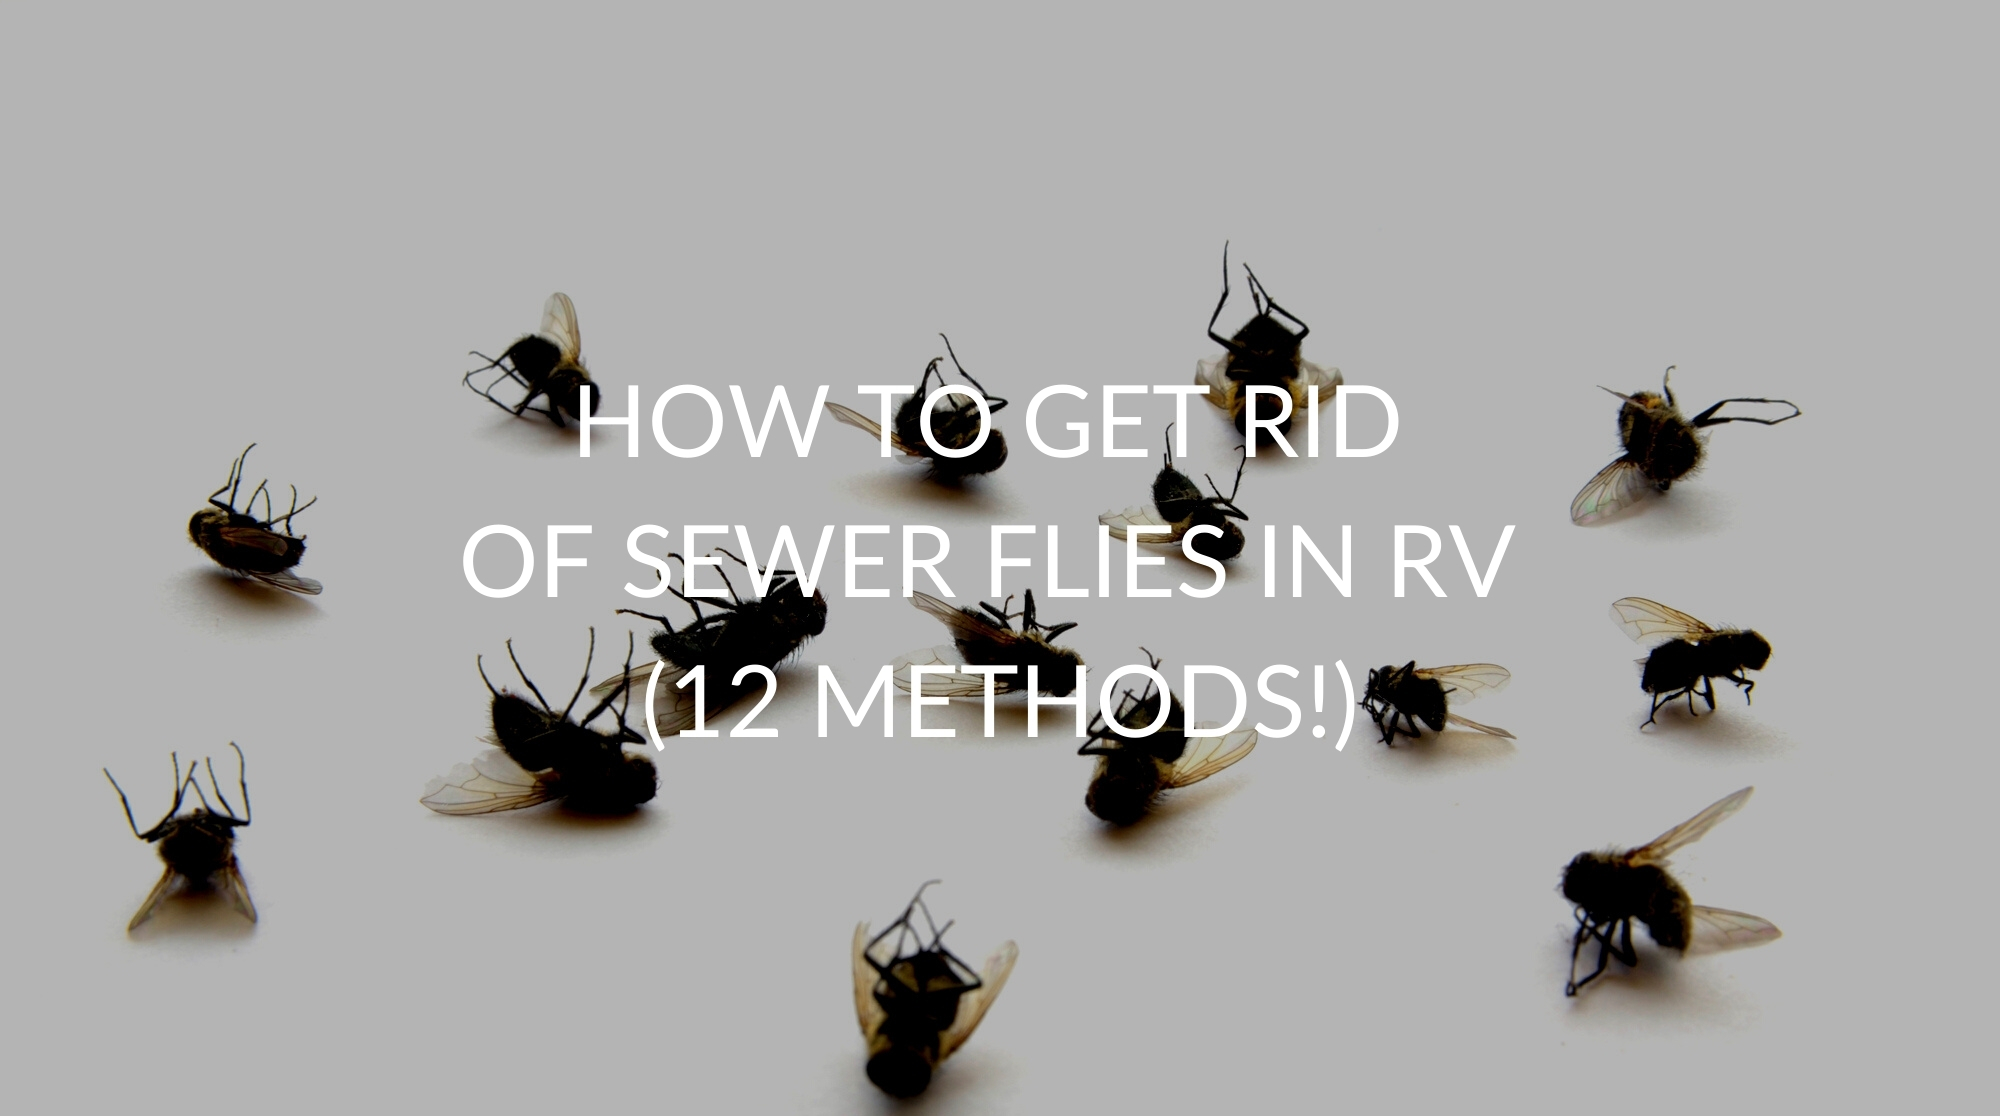 How To Get Rid Of Sewer Flies In RV (12 Methods!)